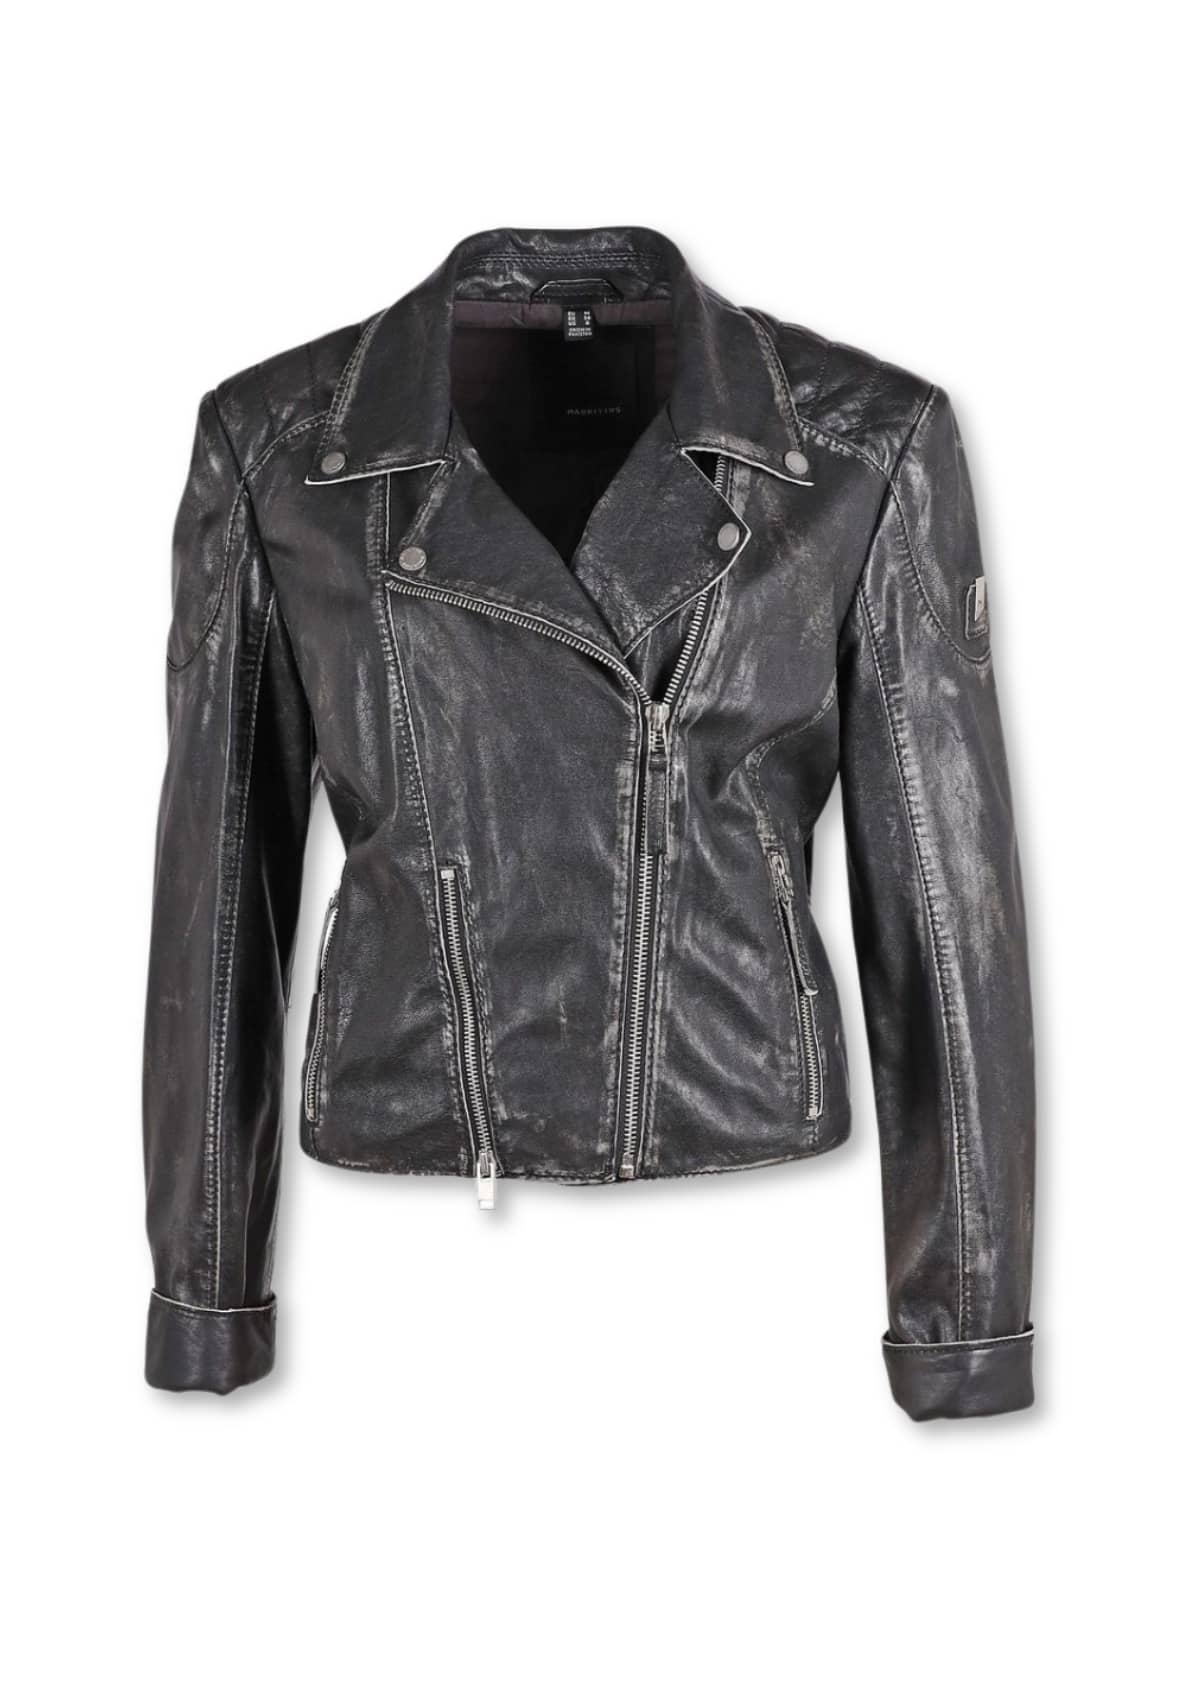 Reanon Leather Jacket - Vintage Black -Mauritius- Ruby Jane-